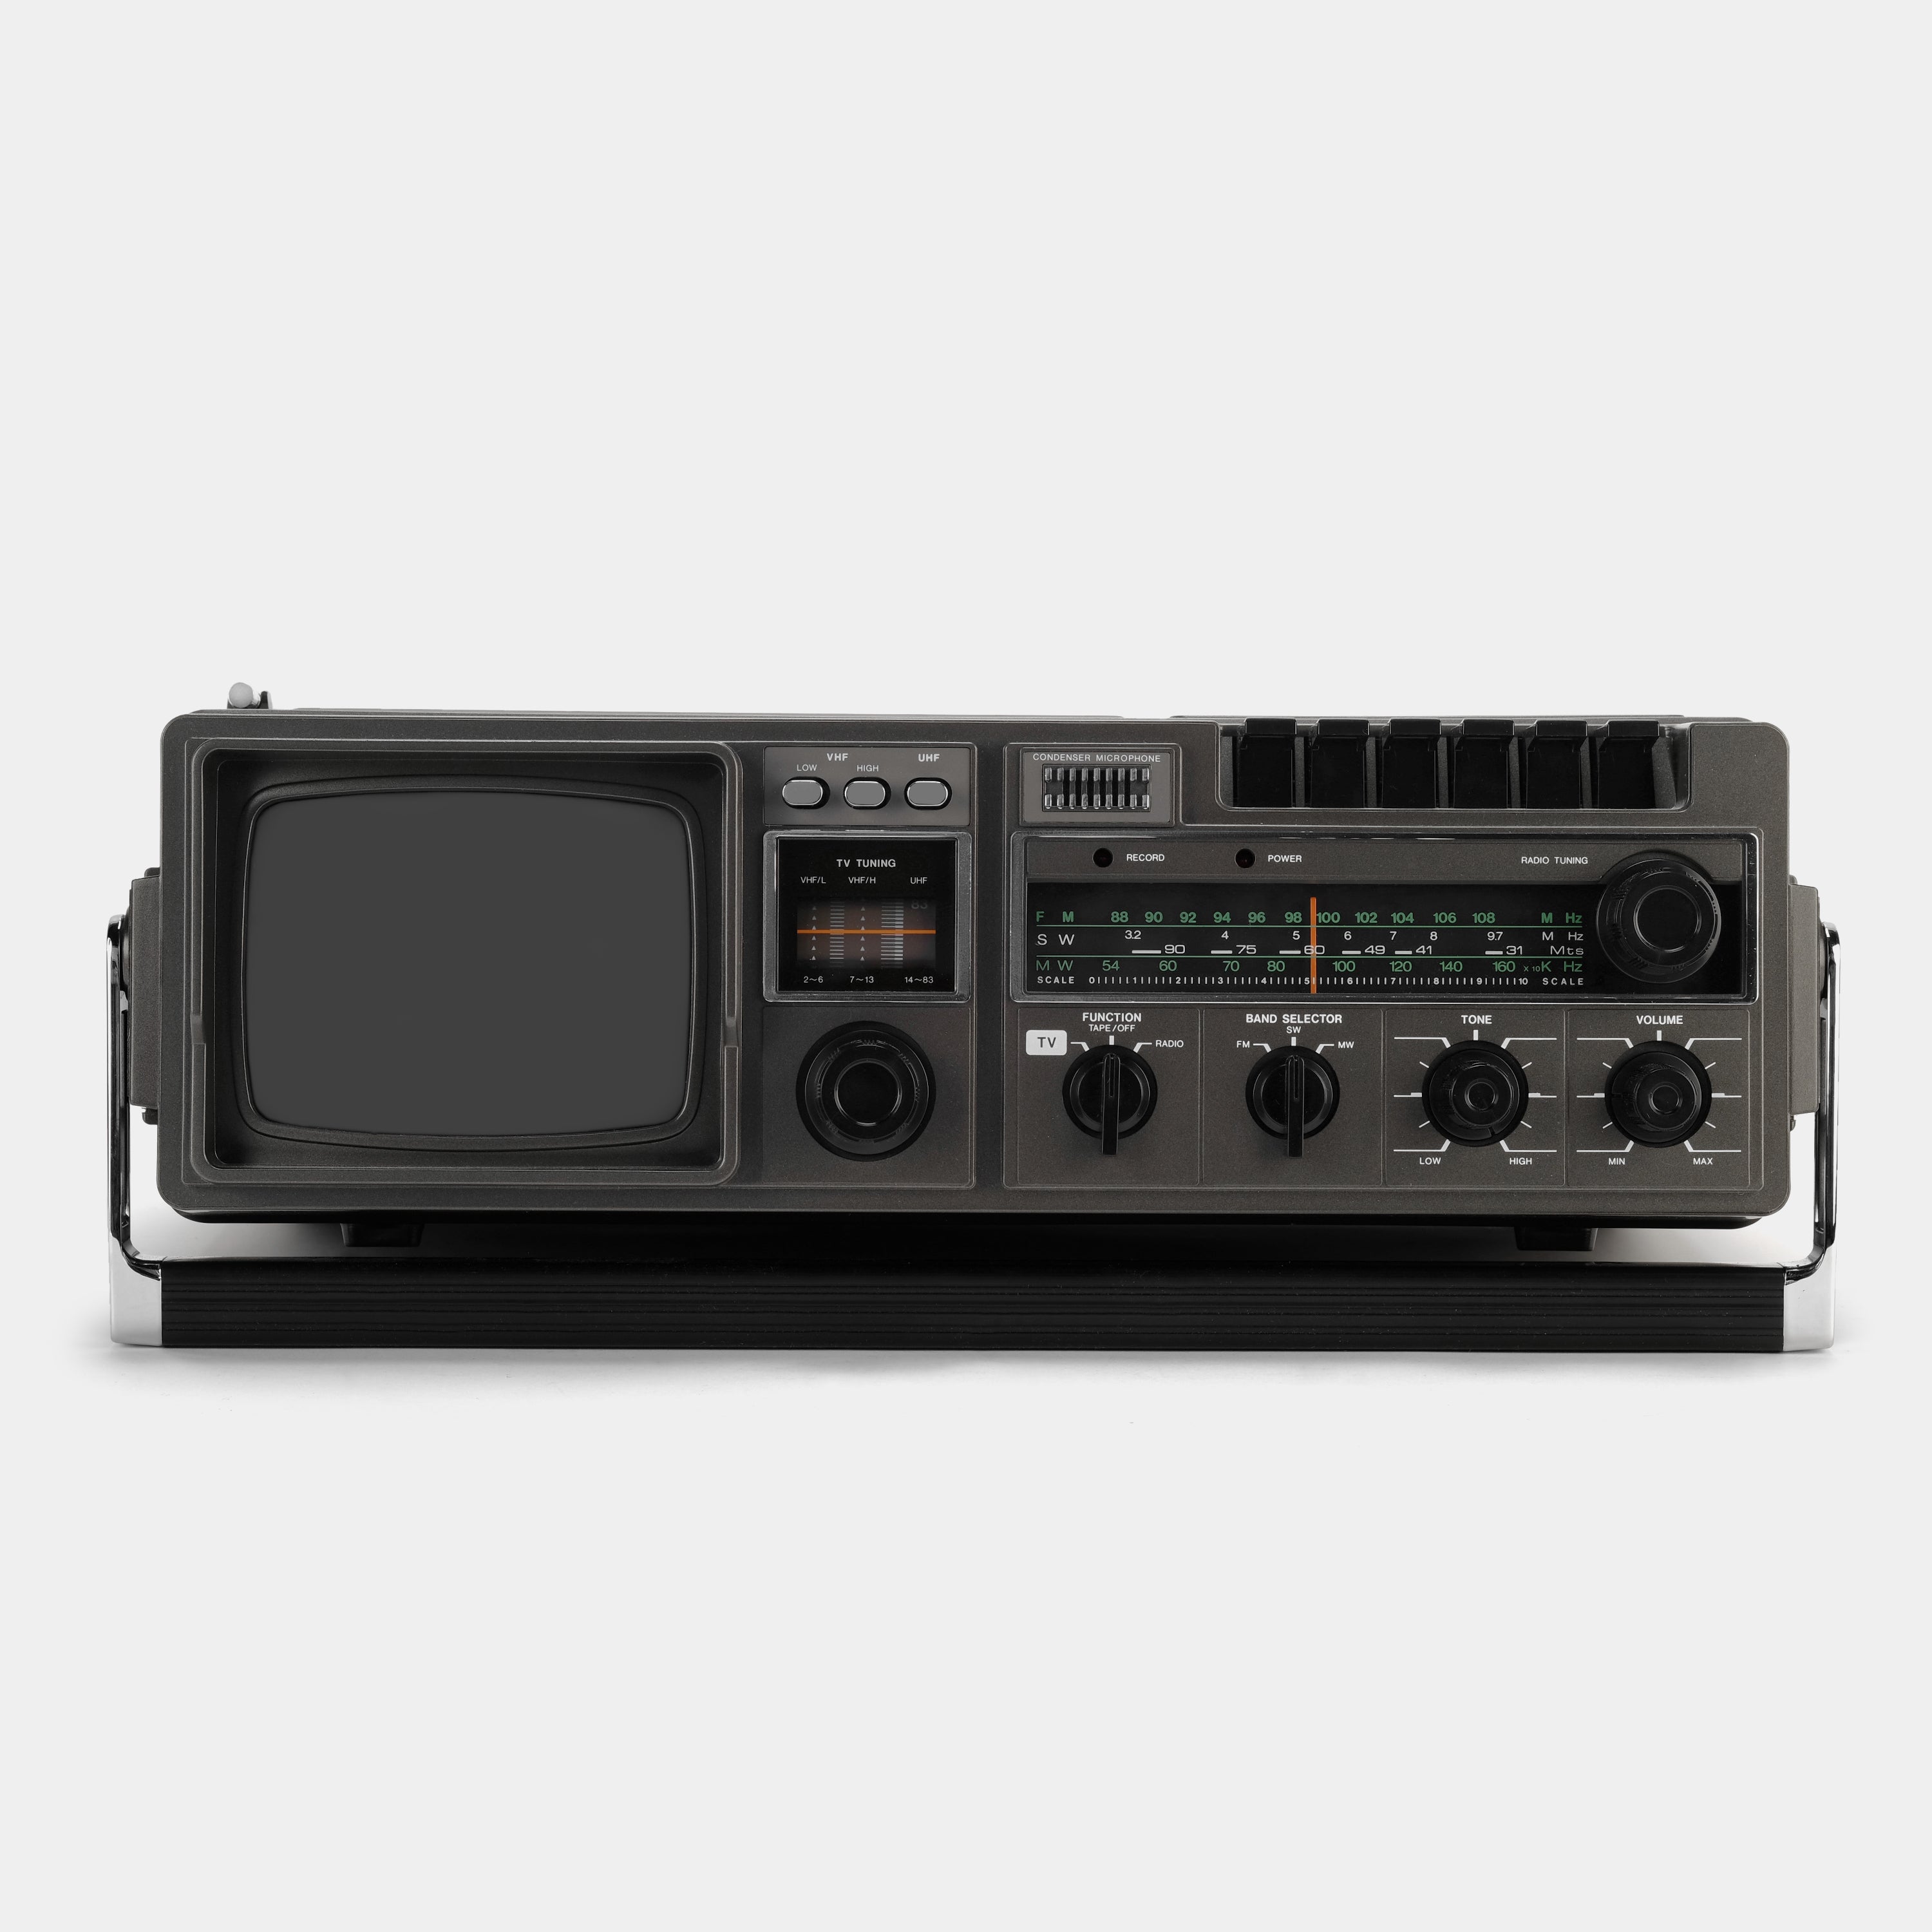 Broksonic CIRT-1818 5 Inch Black & White TV with Radio and Cassette Recorder